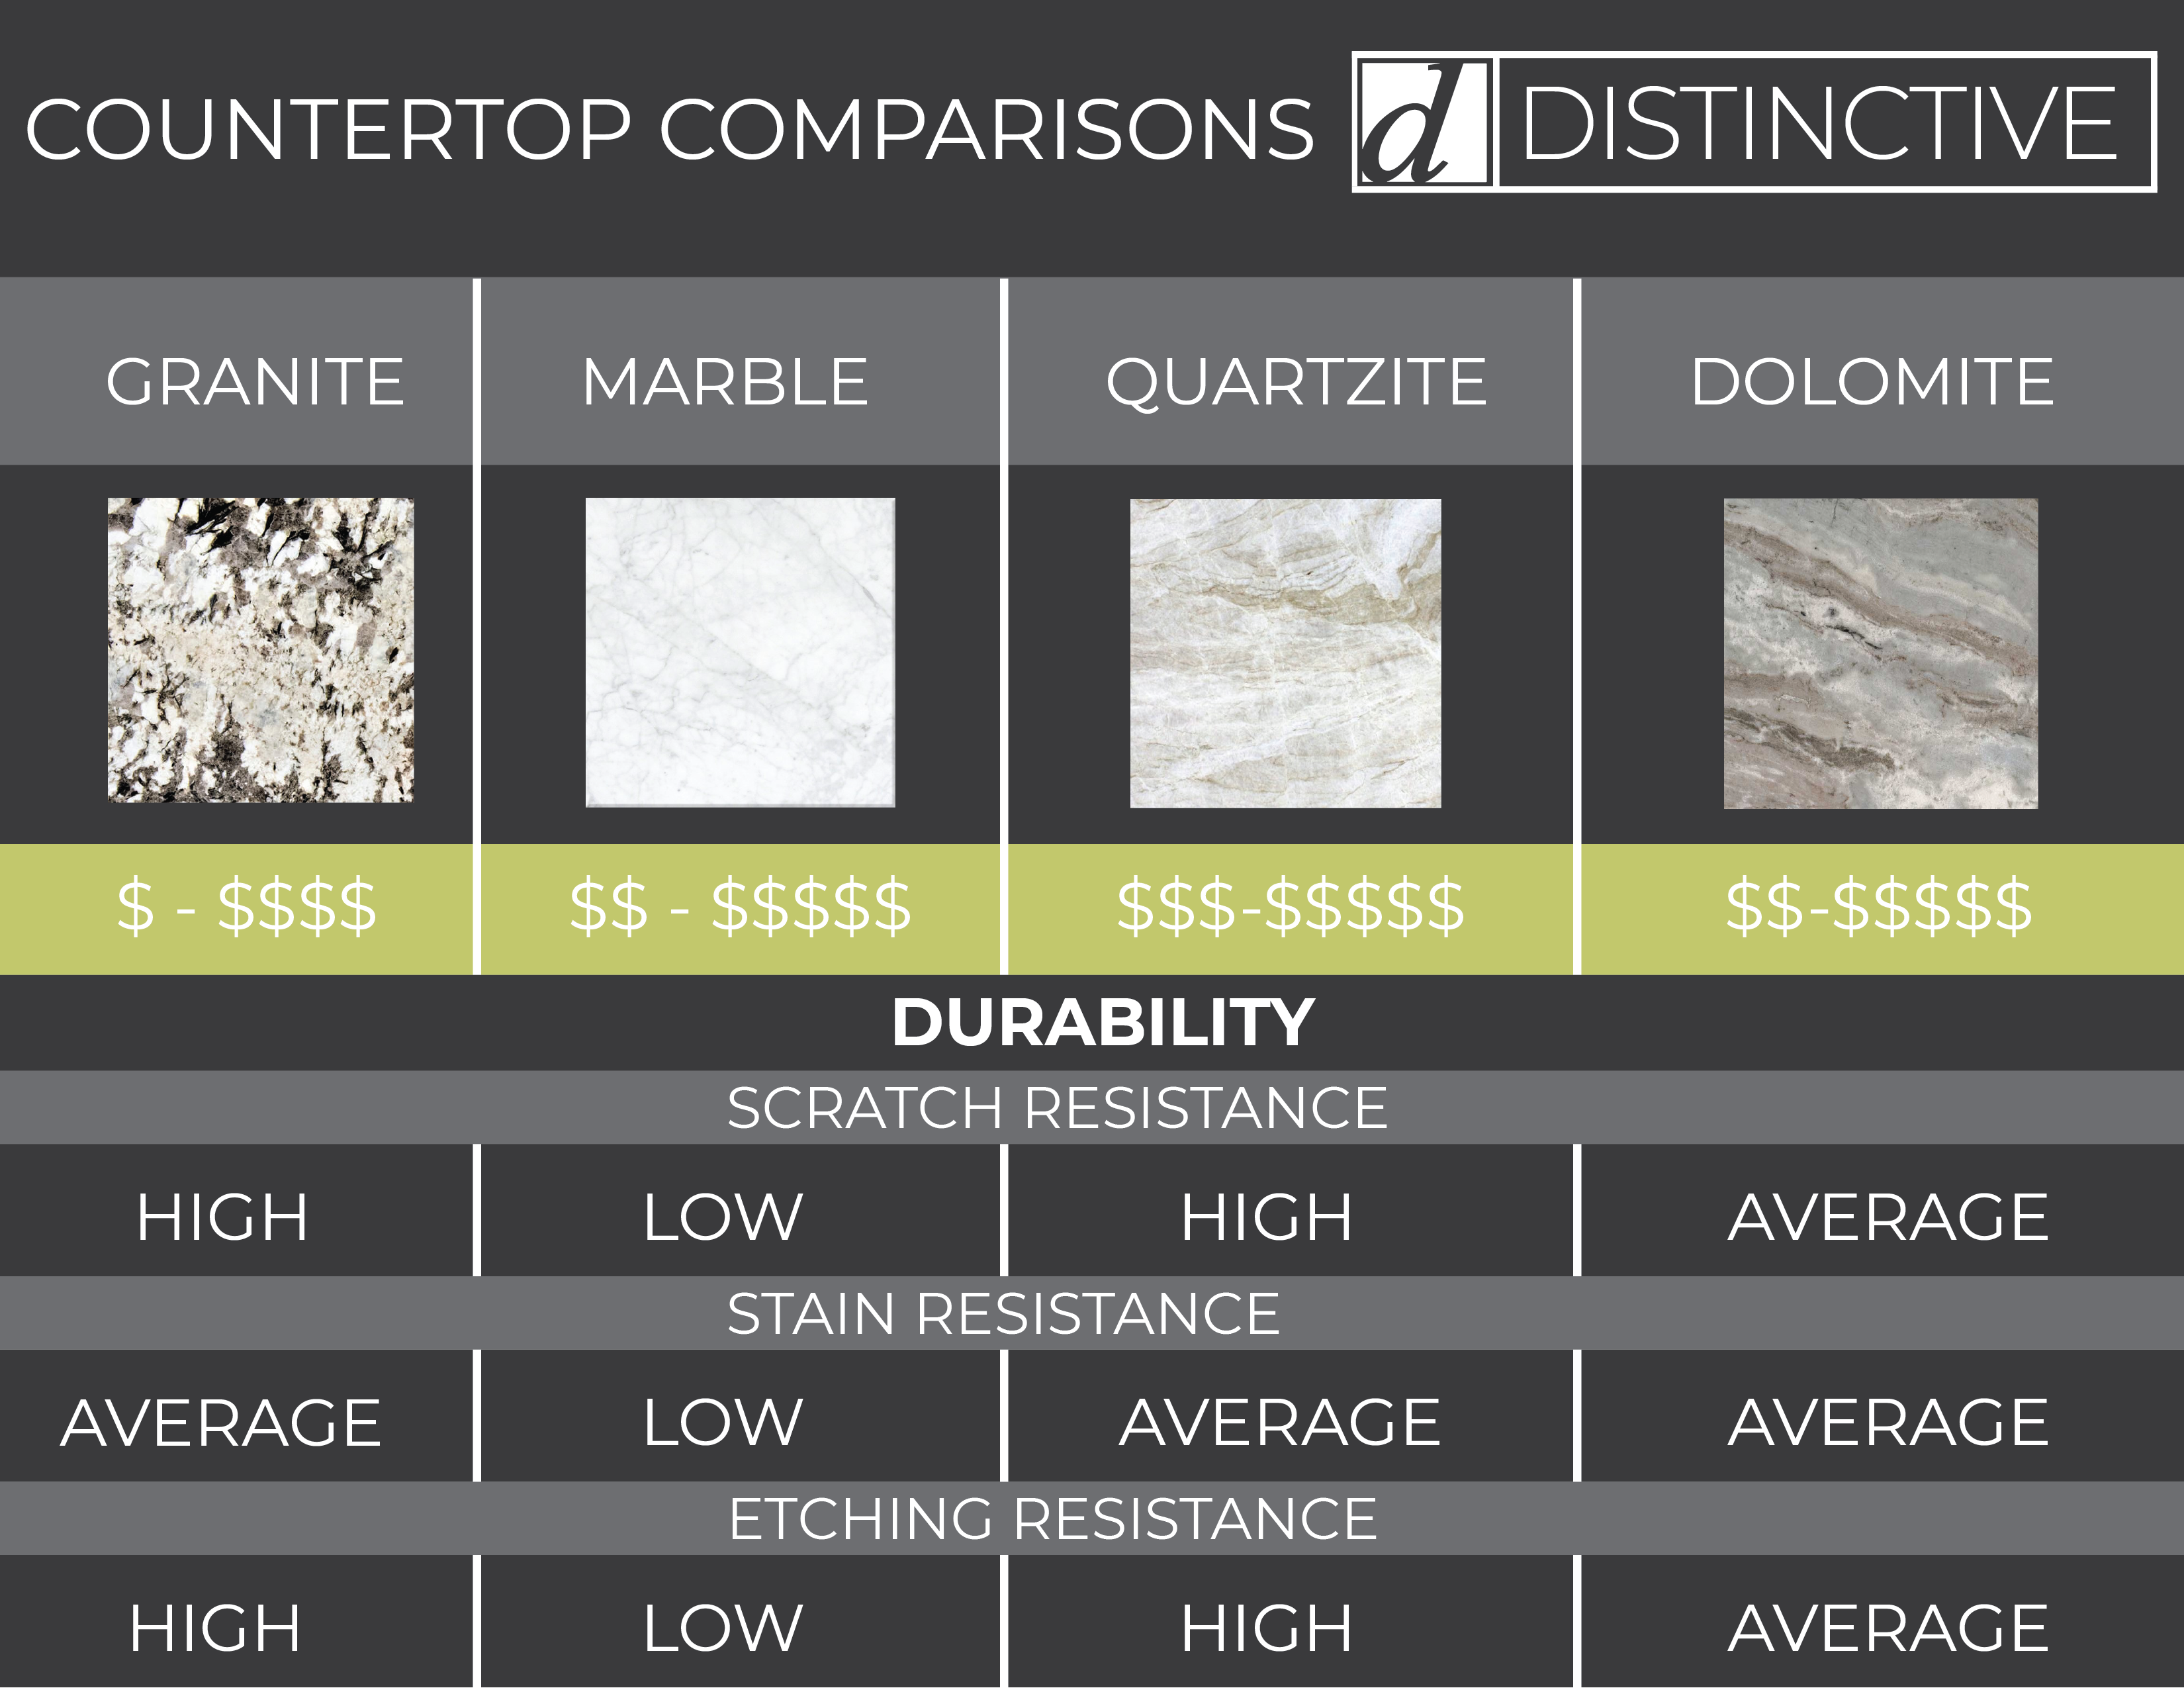 Quartzite vs. Granite Countertops